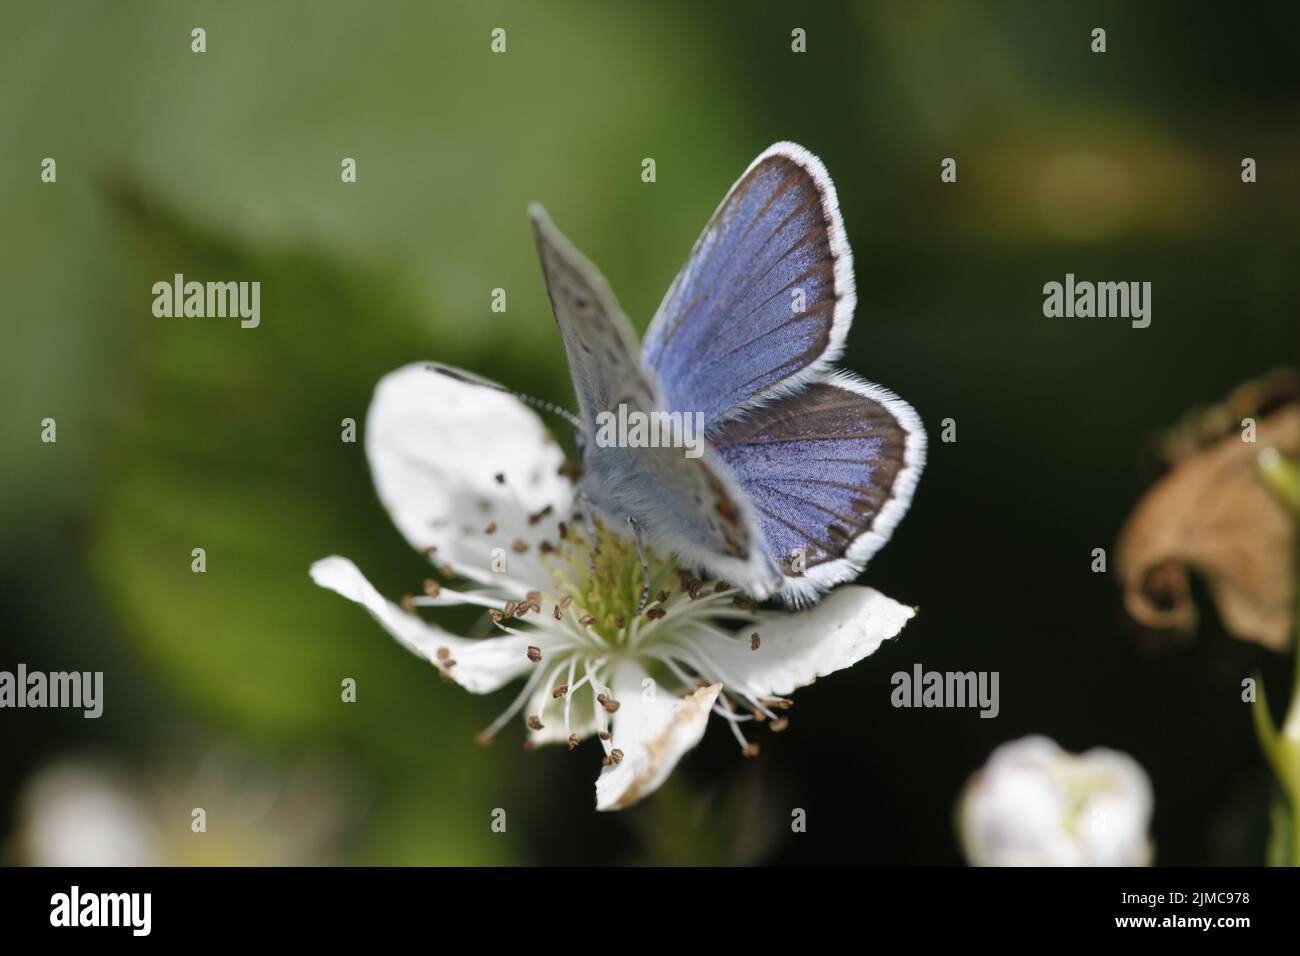 Gossamer winged butterfly Stock Photo